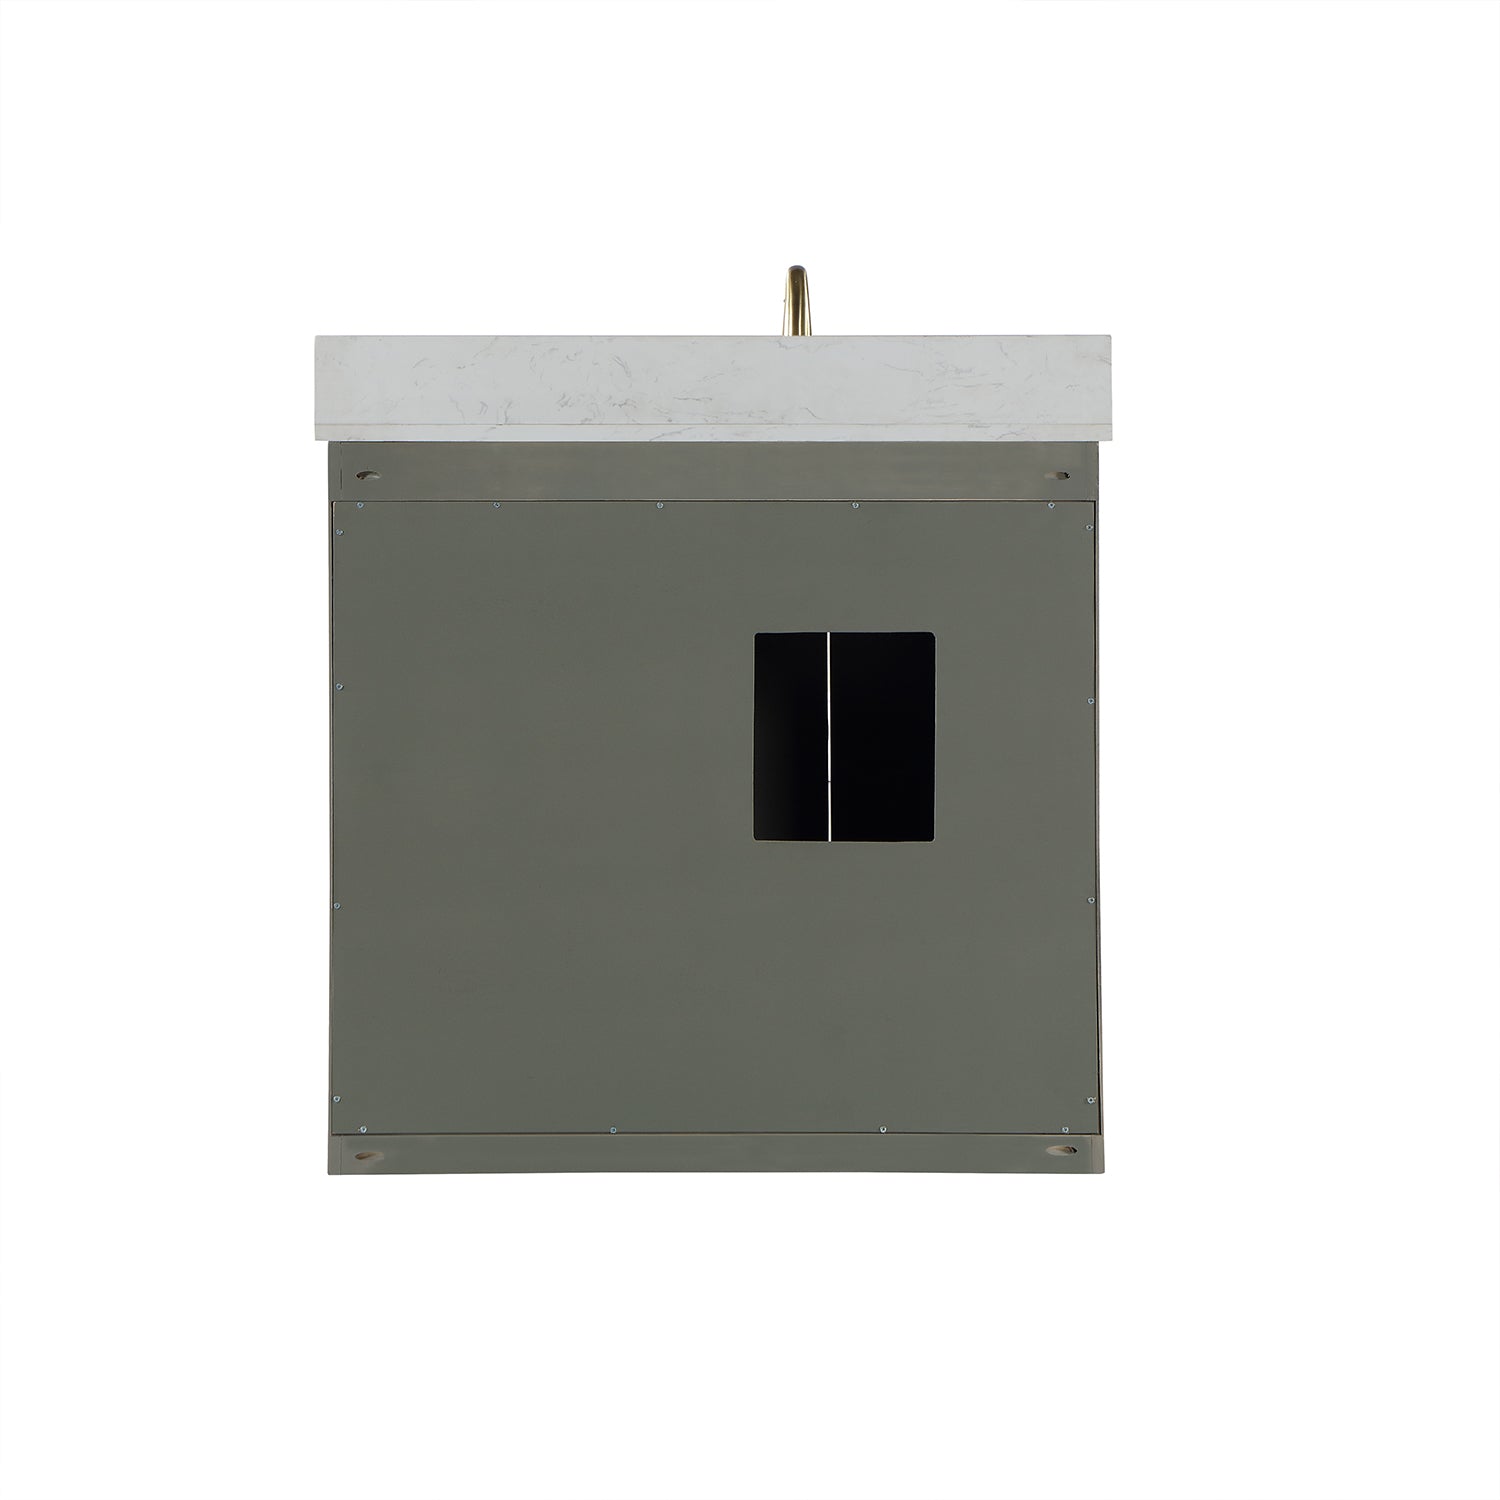 Monna 36" Single Bathroom Vanity Set with Aosta White Composite Stone Countertop